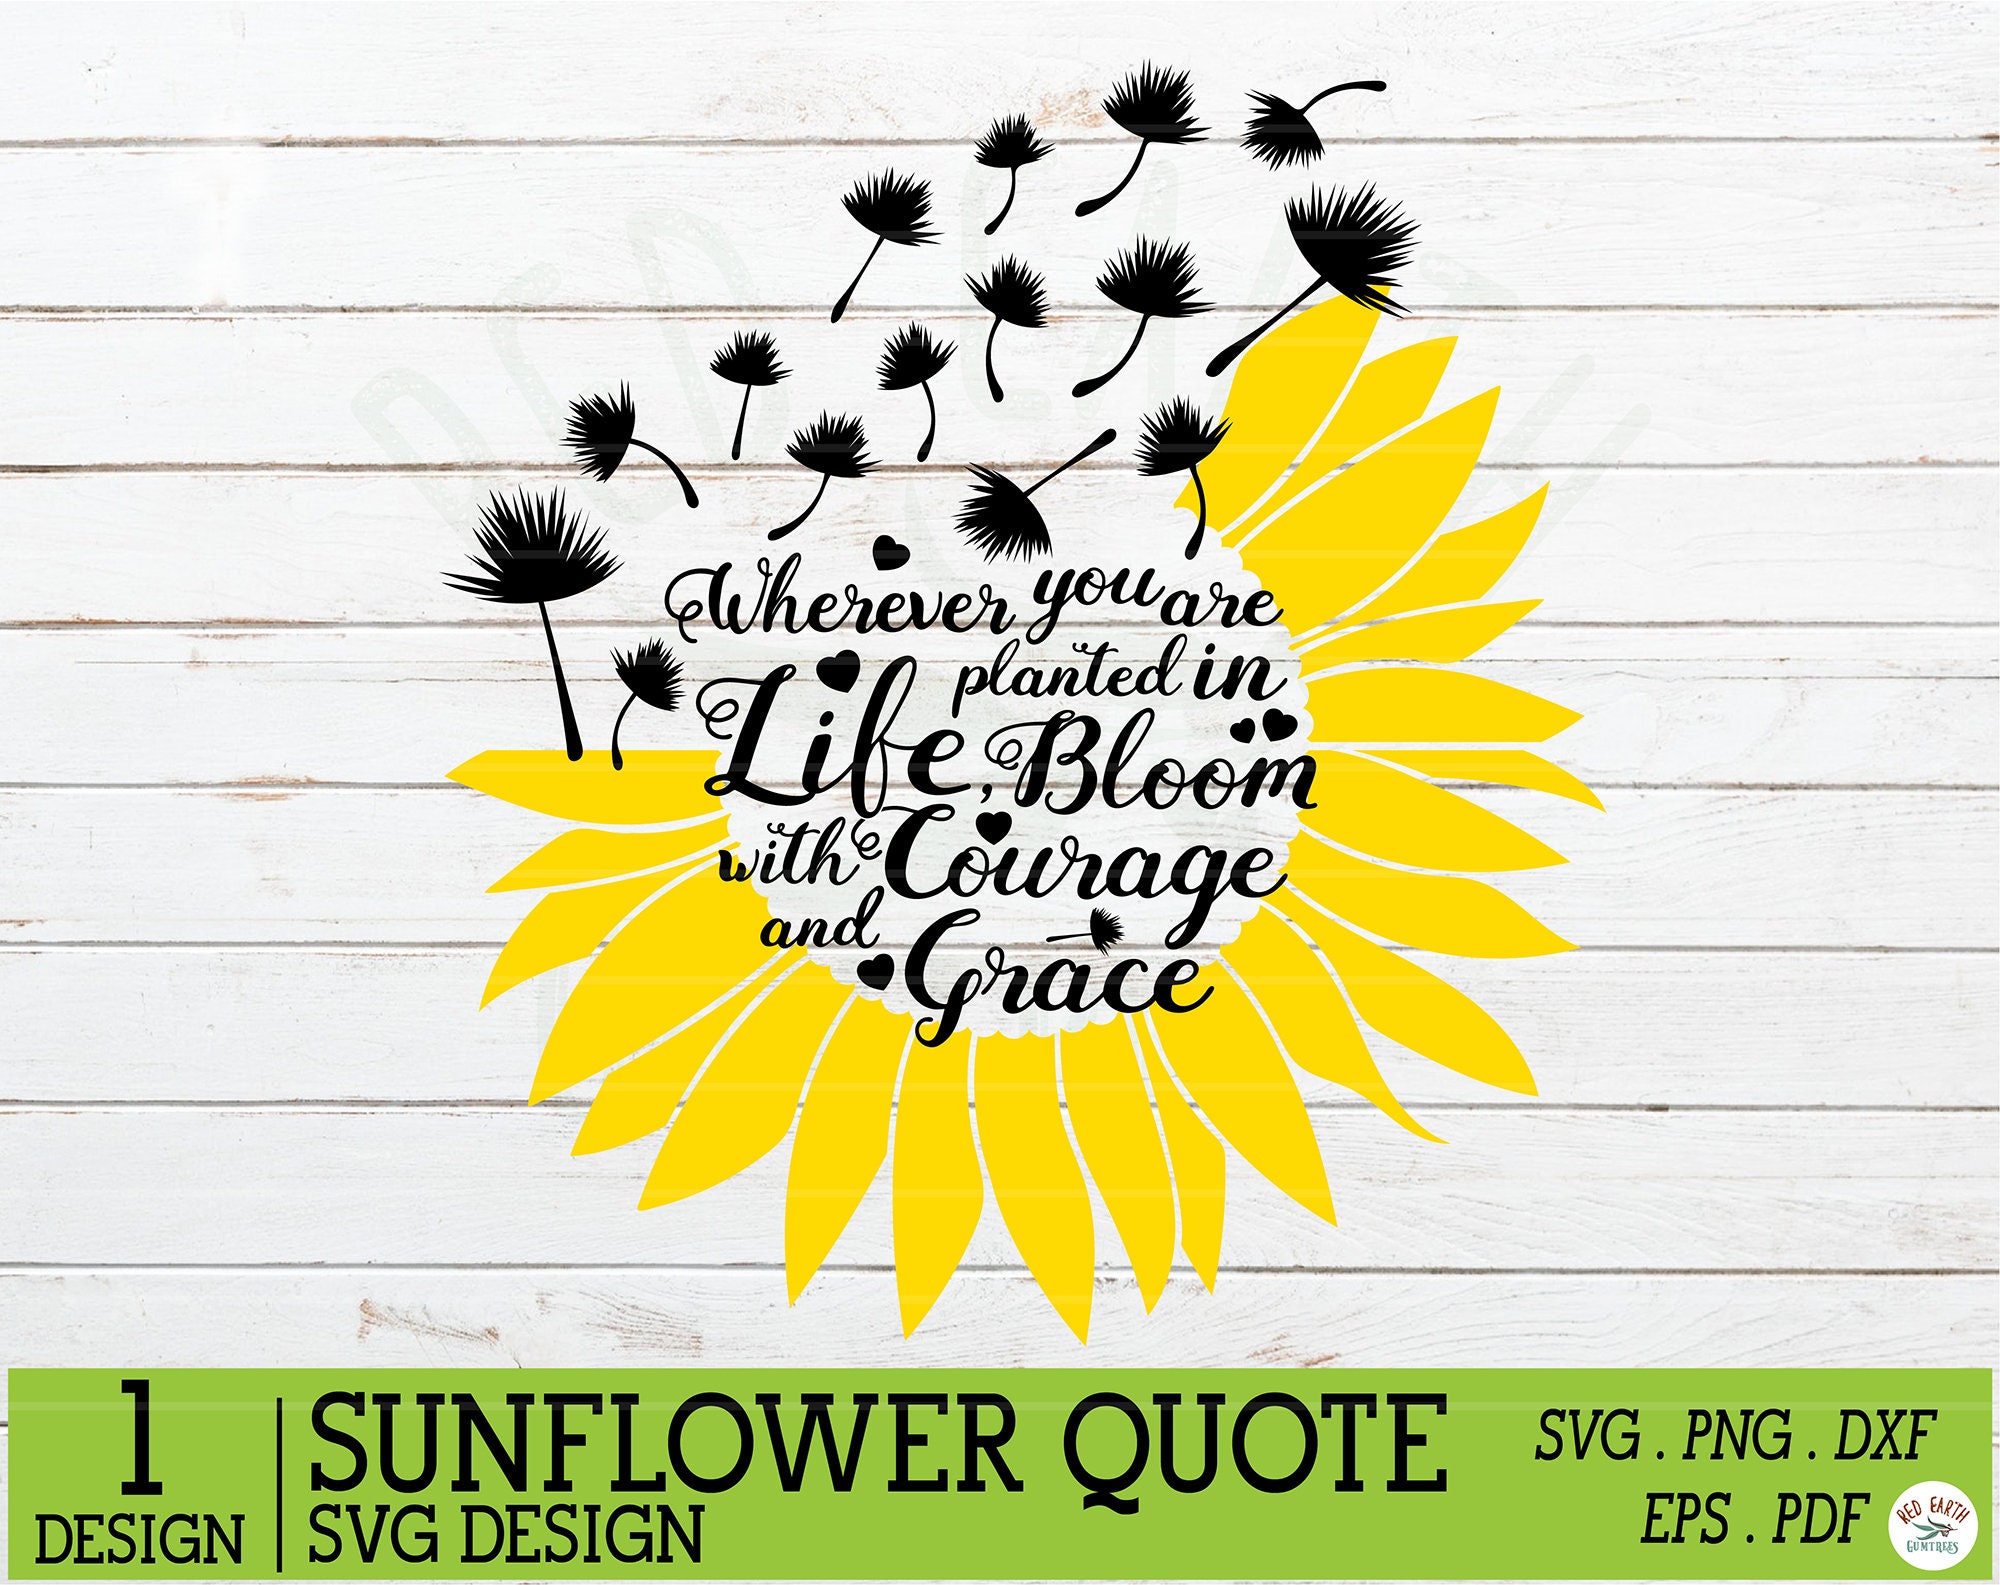 Sunflower Sayings SVG